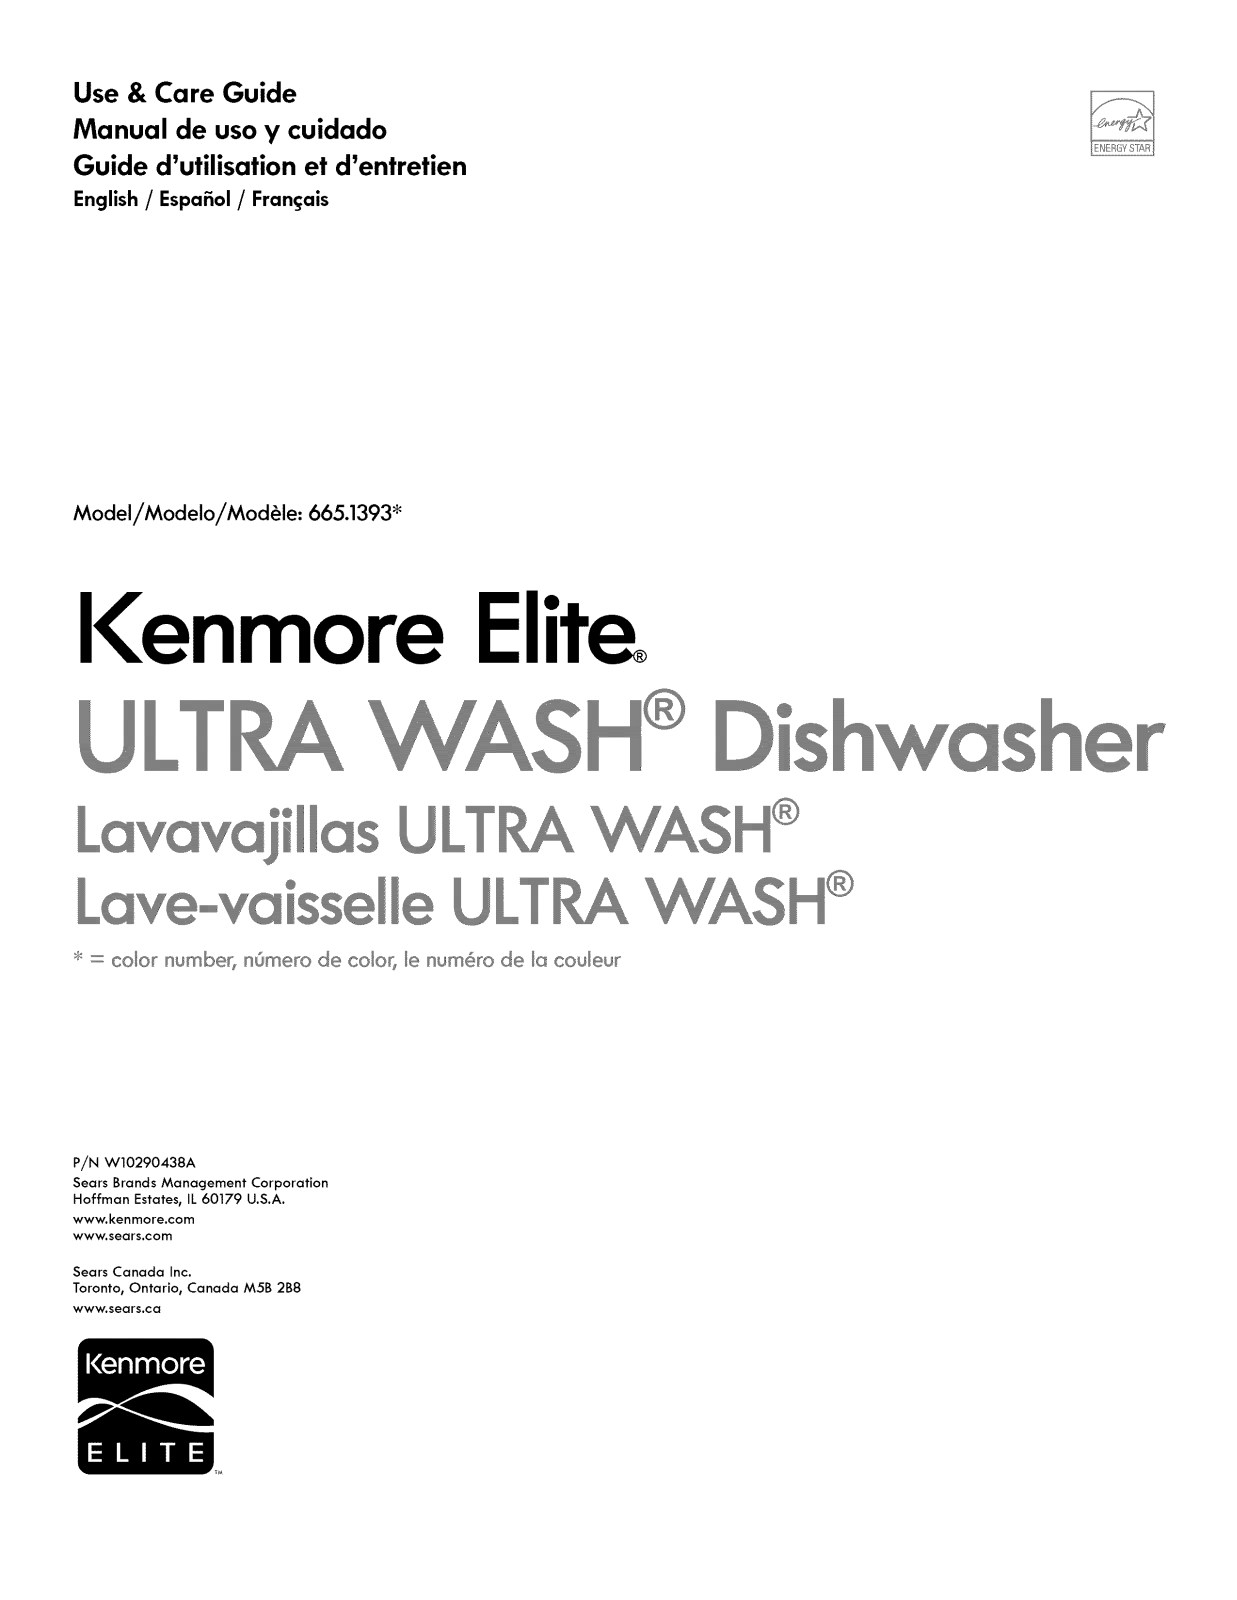 Kenmore Elite 66513932K010, 66513932K011, 66513932K012, 66513932K013, 66513932K014 Owner’s Manual